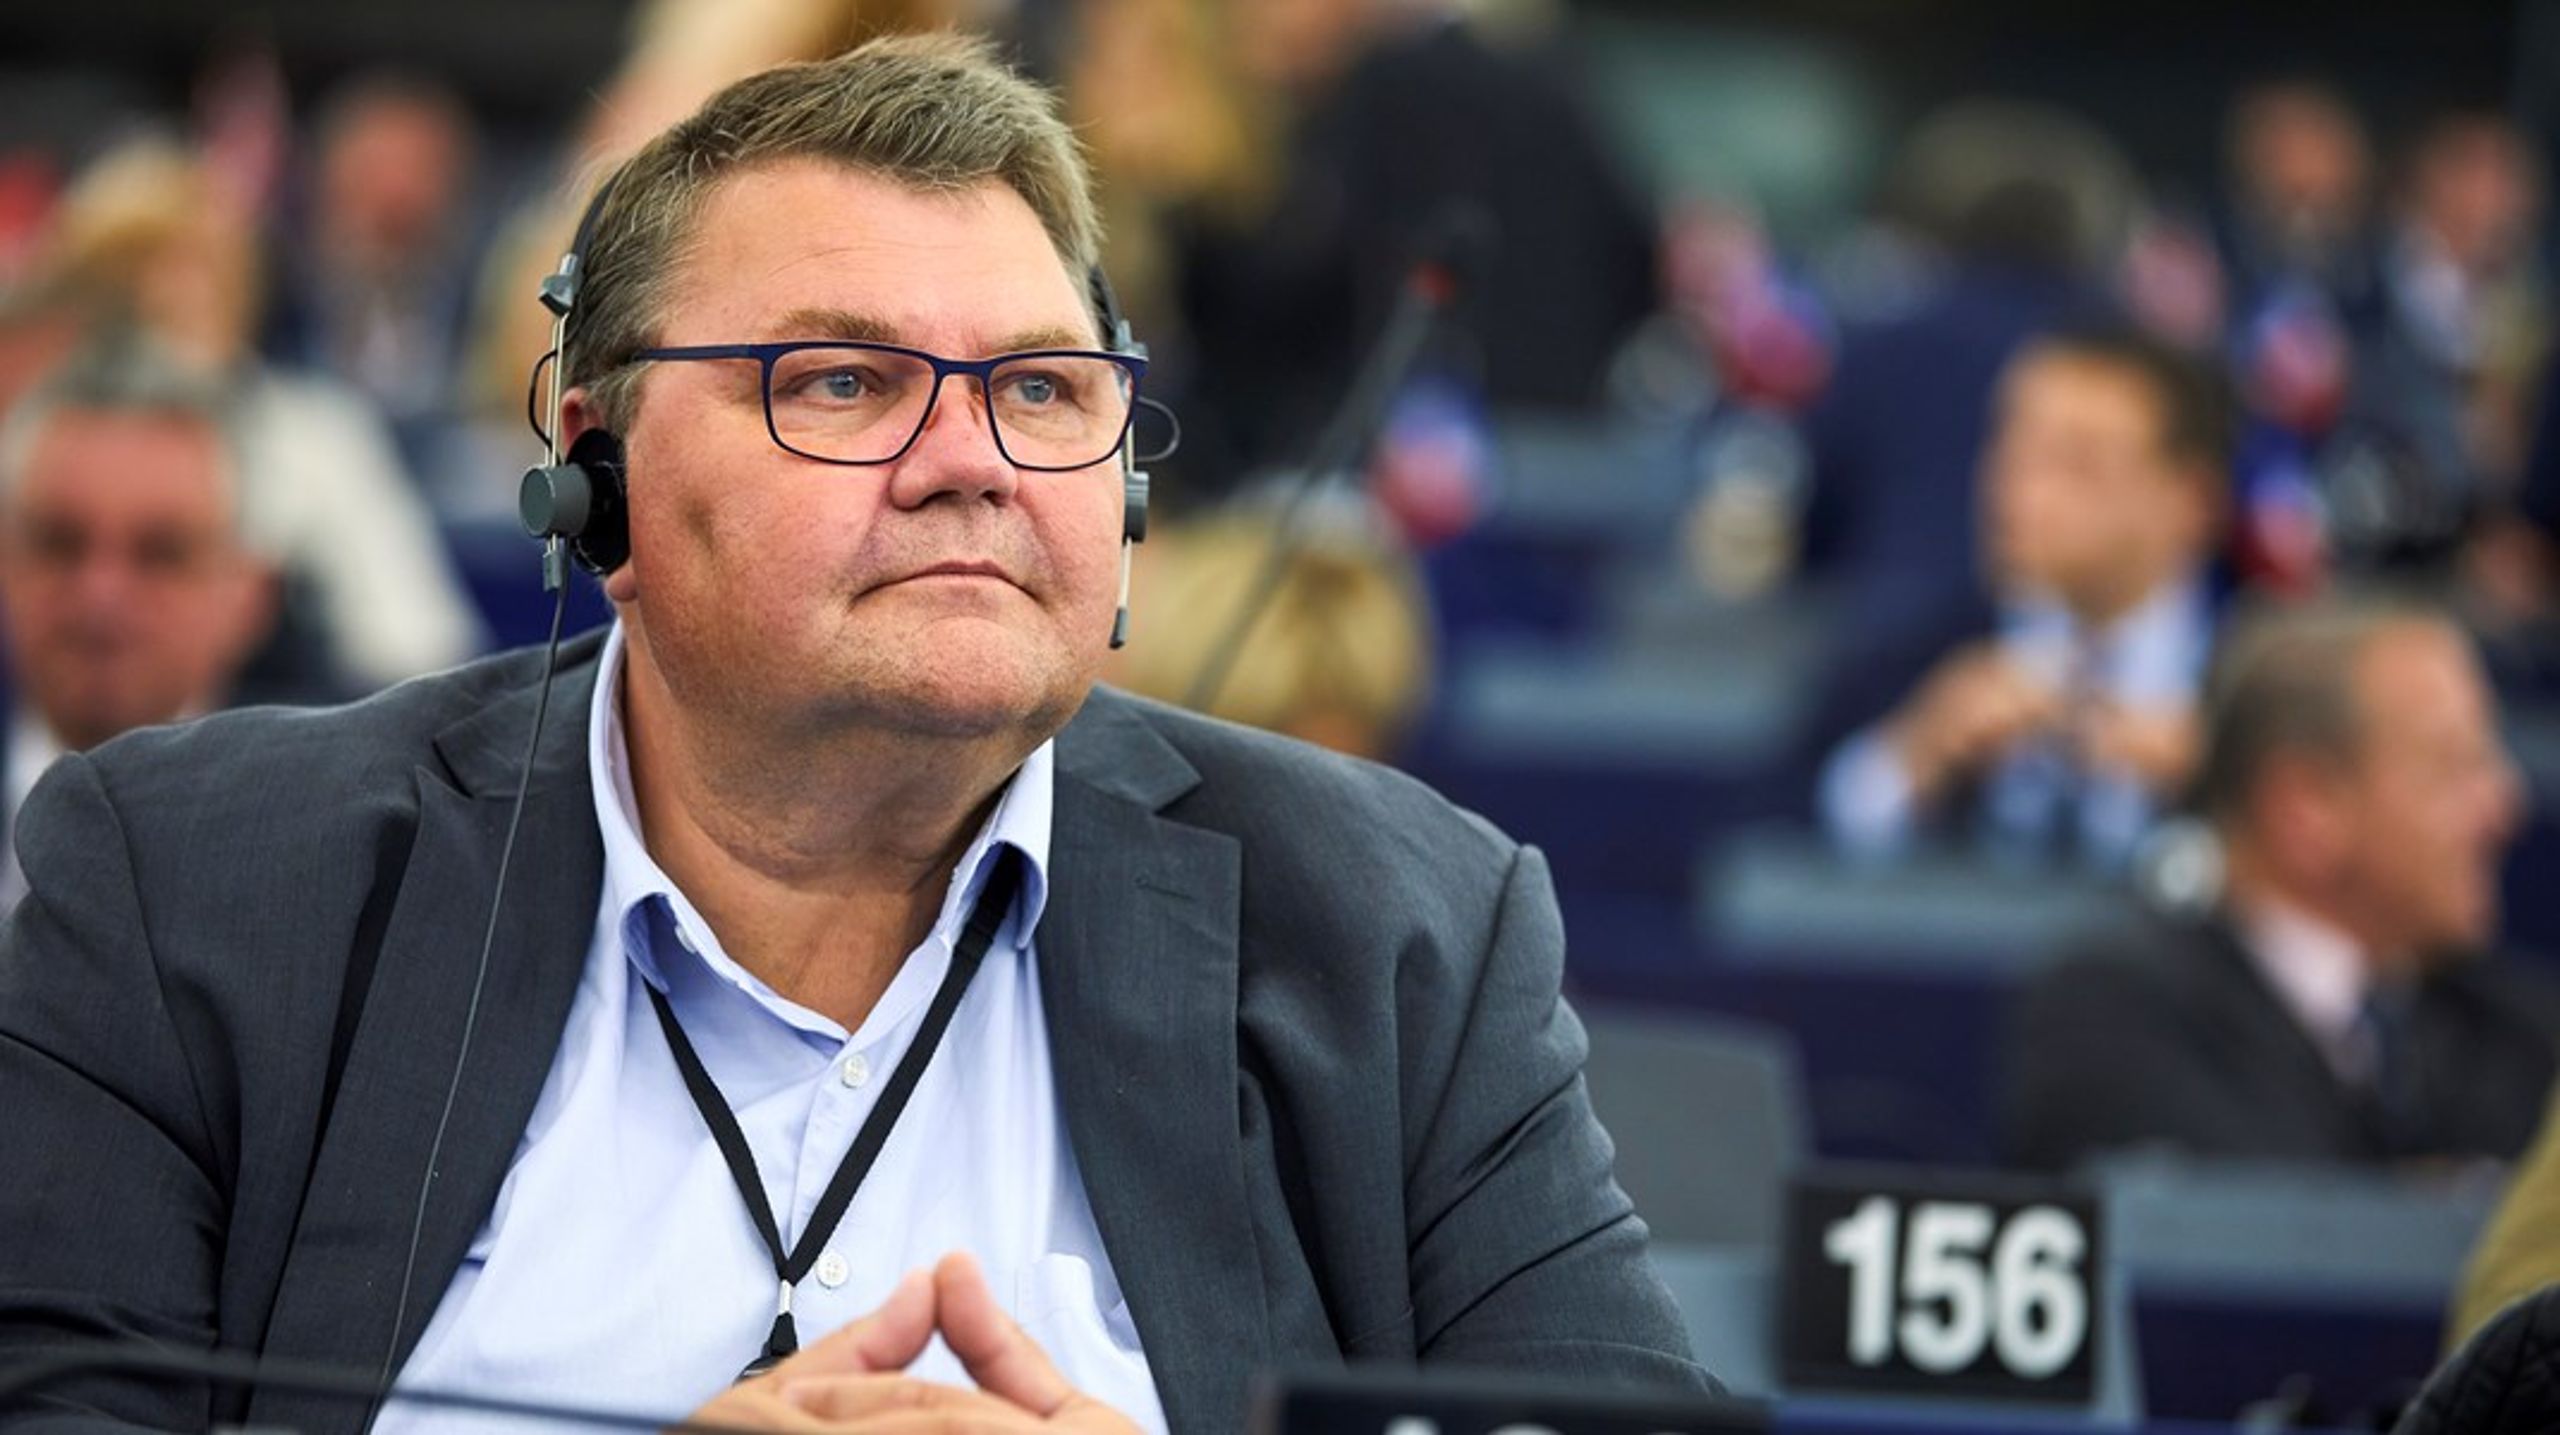 Peter Lundgren har suttit i Europaparlamentet sedan maj 2014.